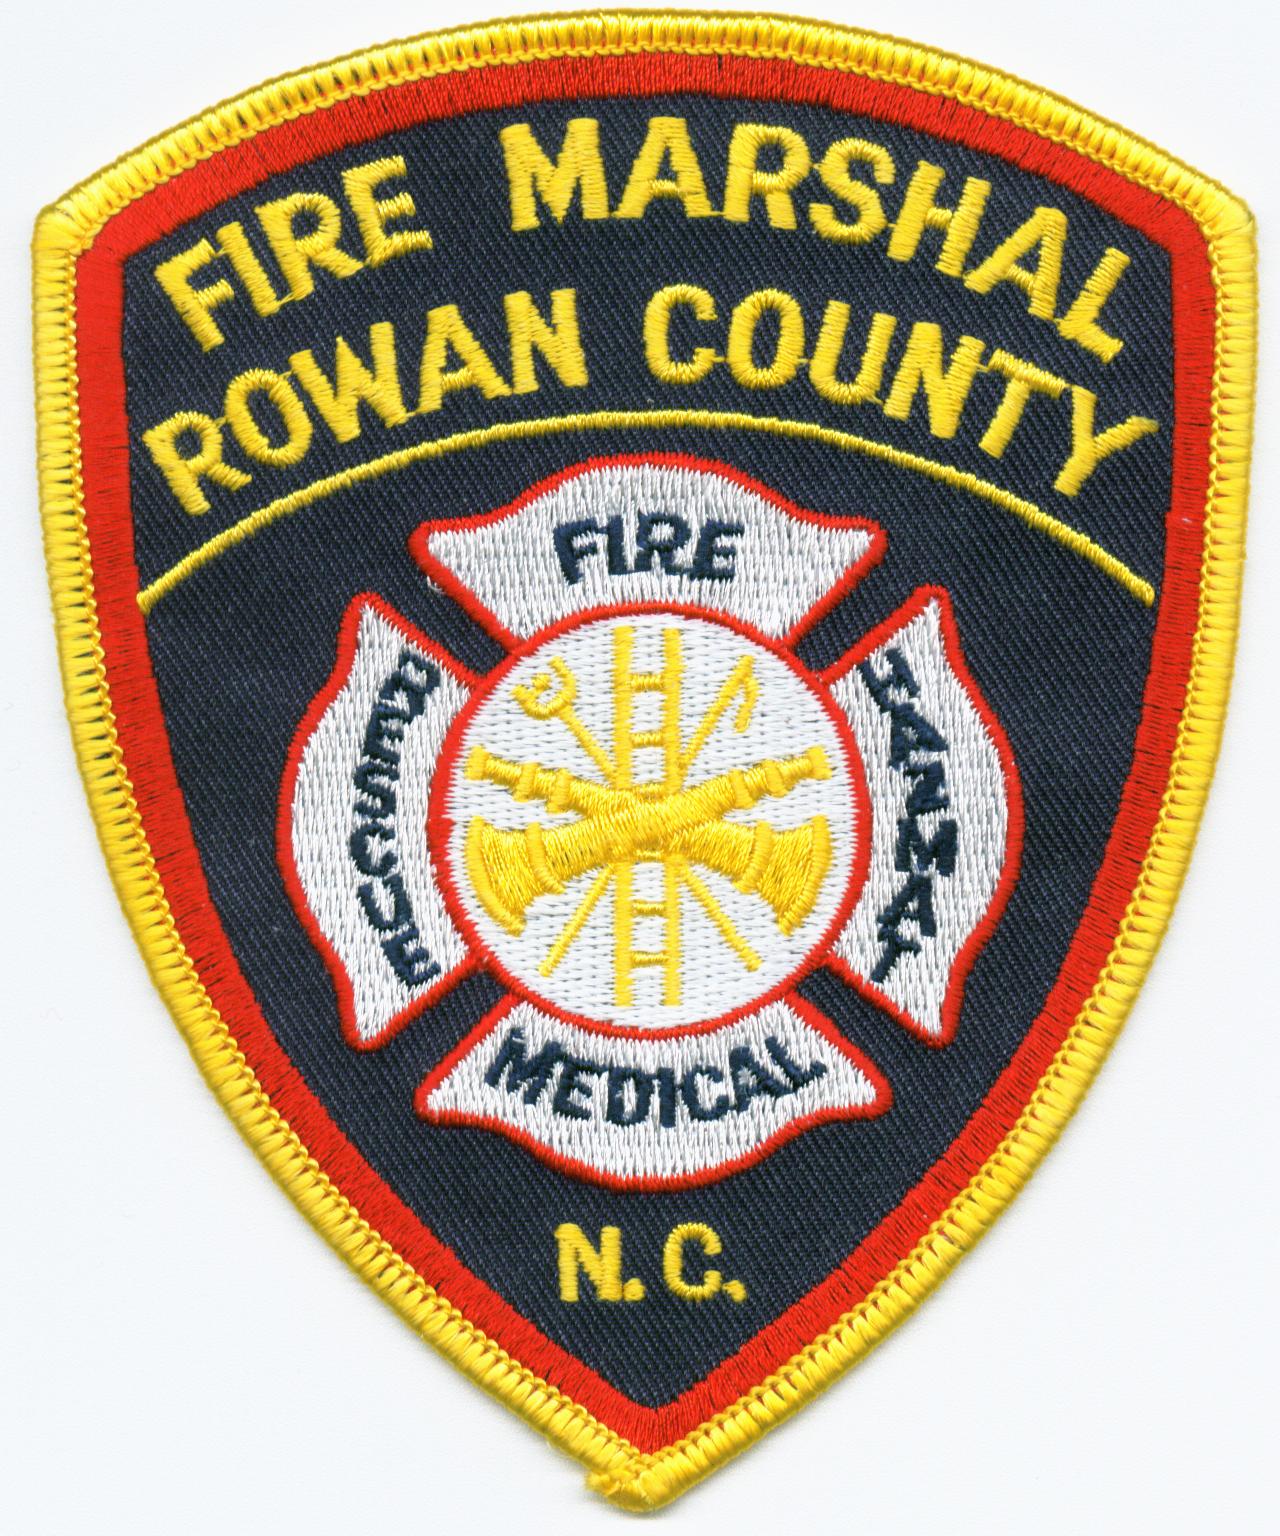 ROWAN COUNTY FIRE MARSHAL